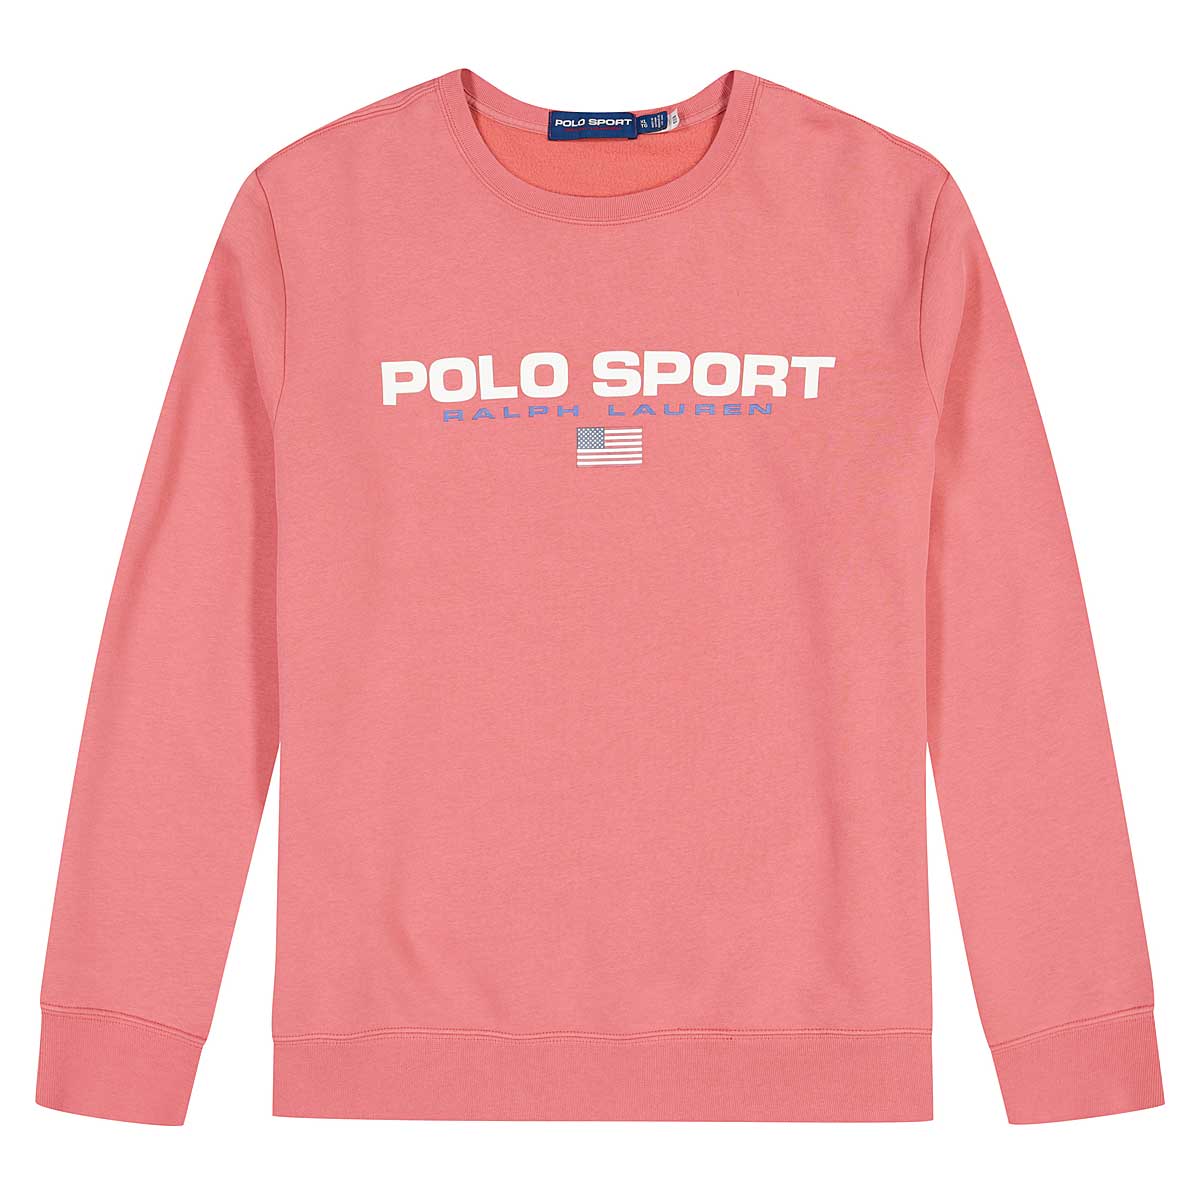 Polo Ralph Lauren Polo Sport Sweatshirt, Adirondack Berry